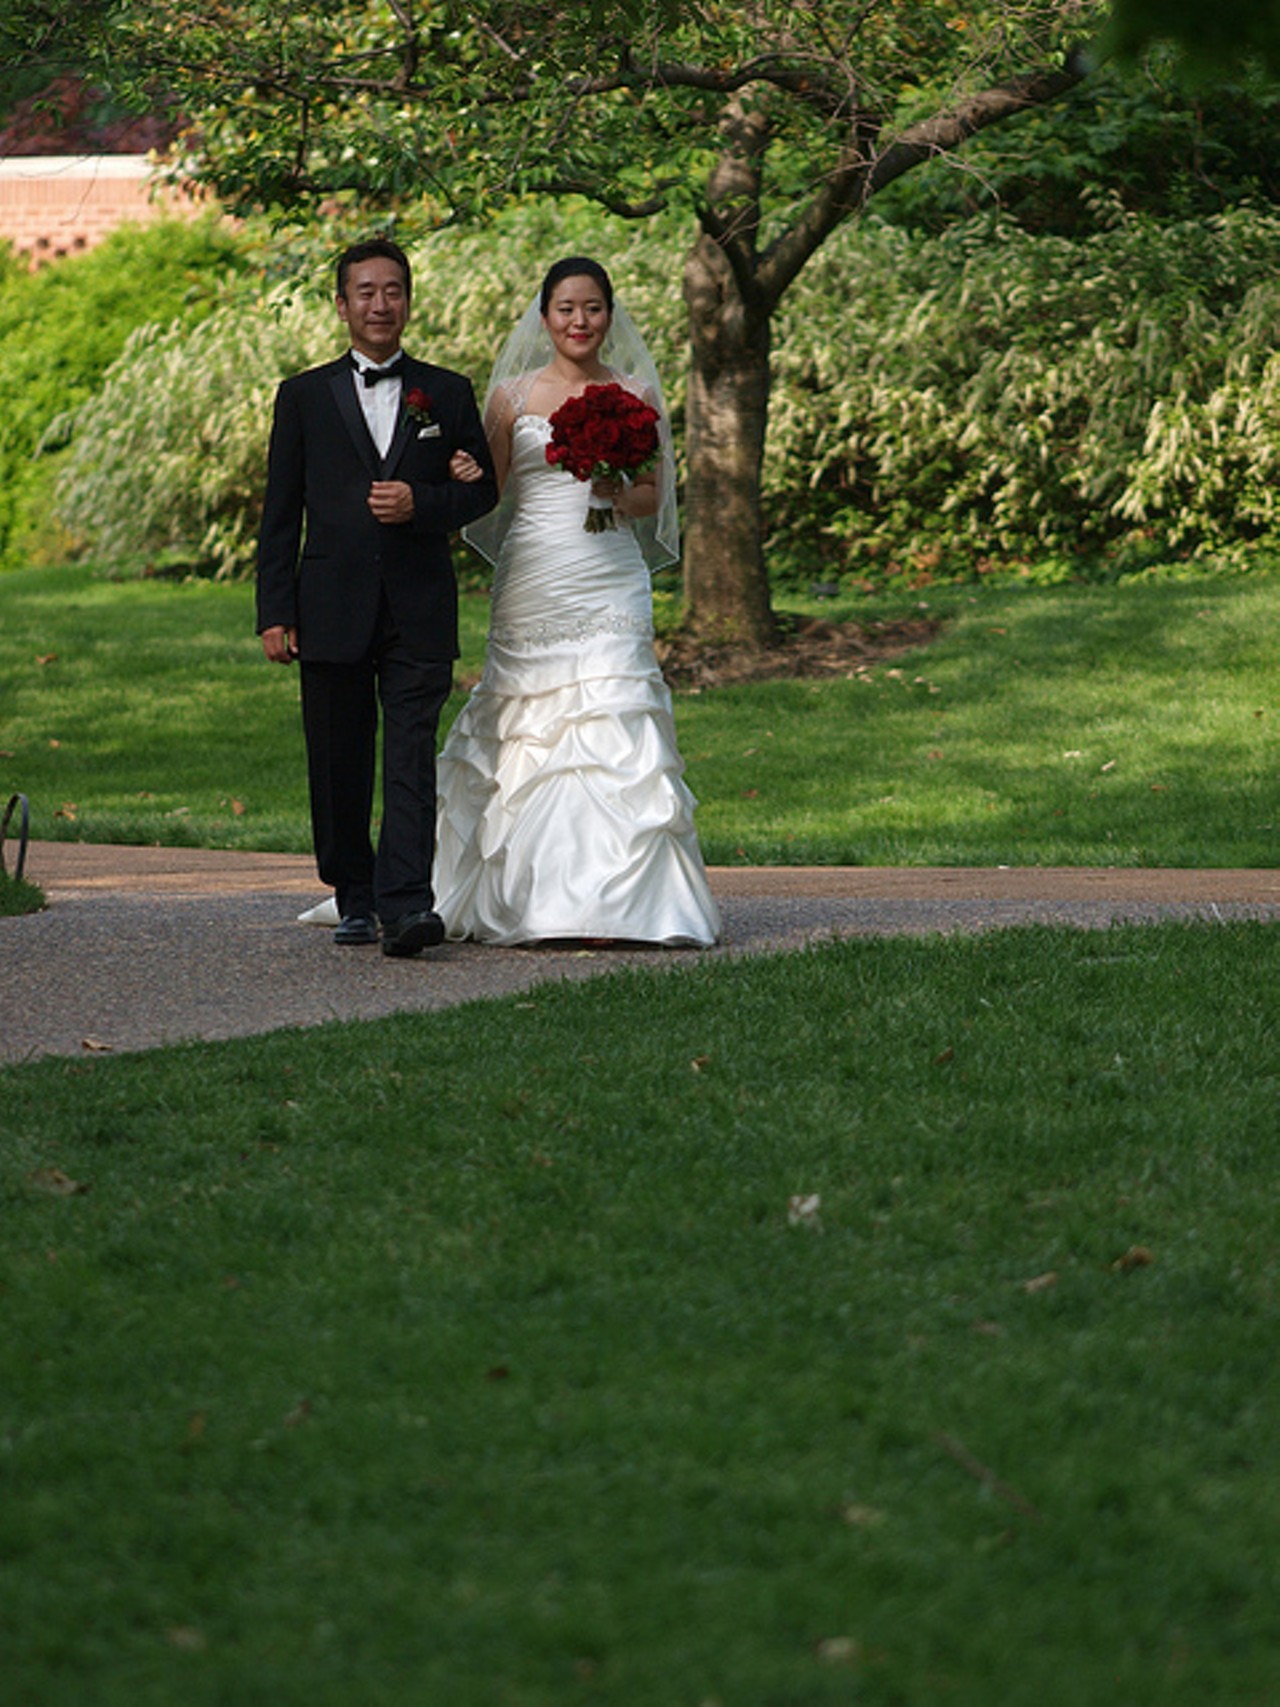 Creep on a wedding at the Missouri Botanical Garden.Photo courtesy of Flickr / Mike Liu